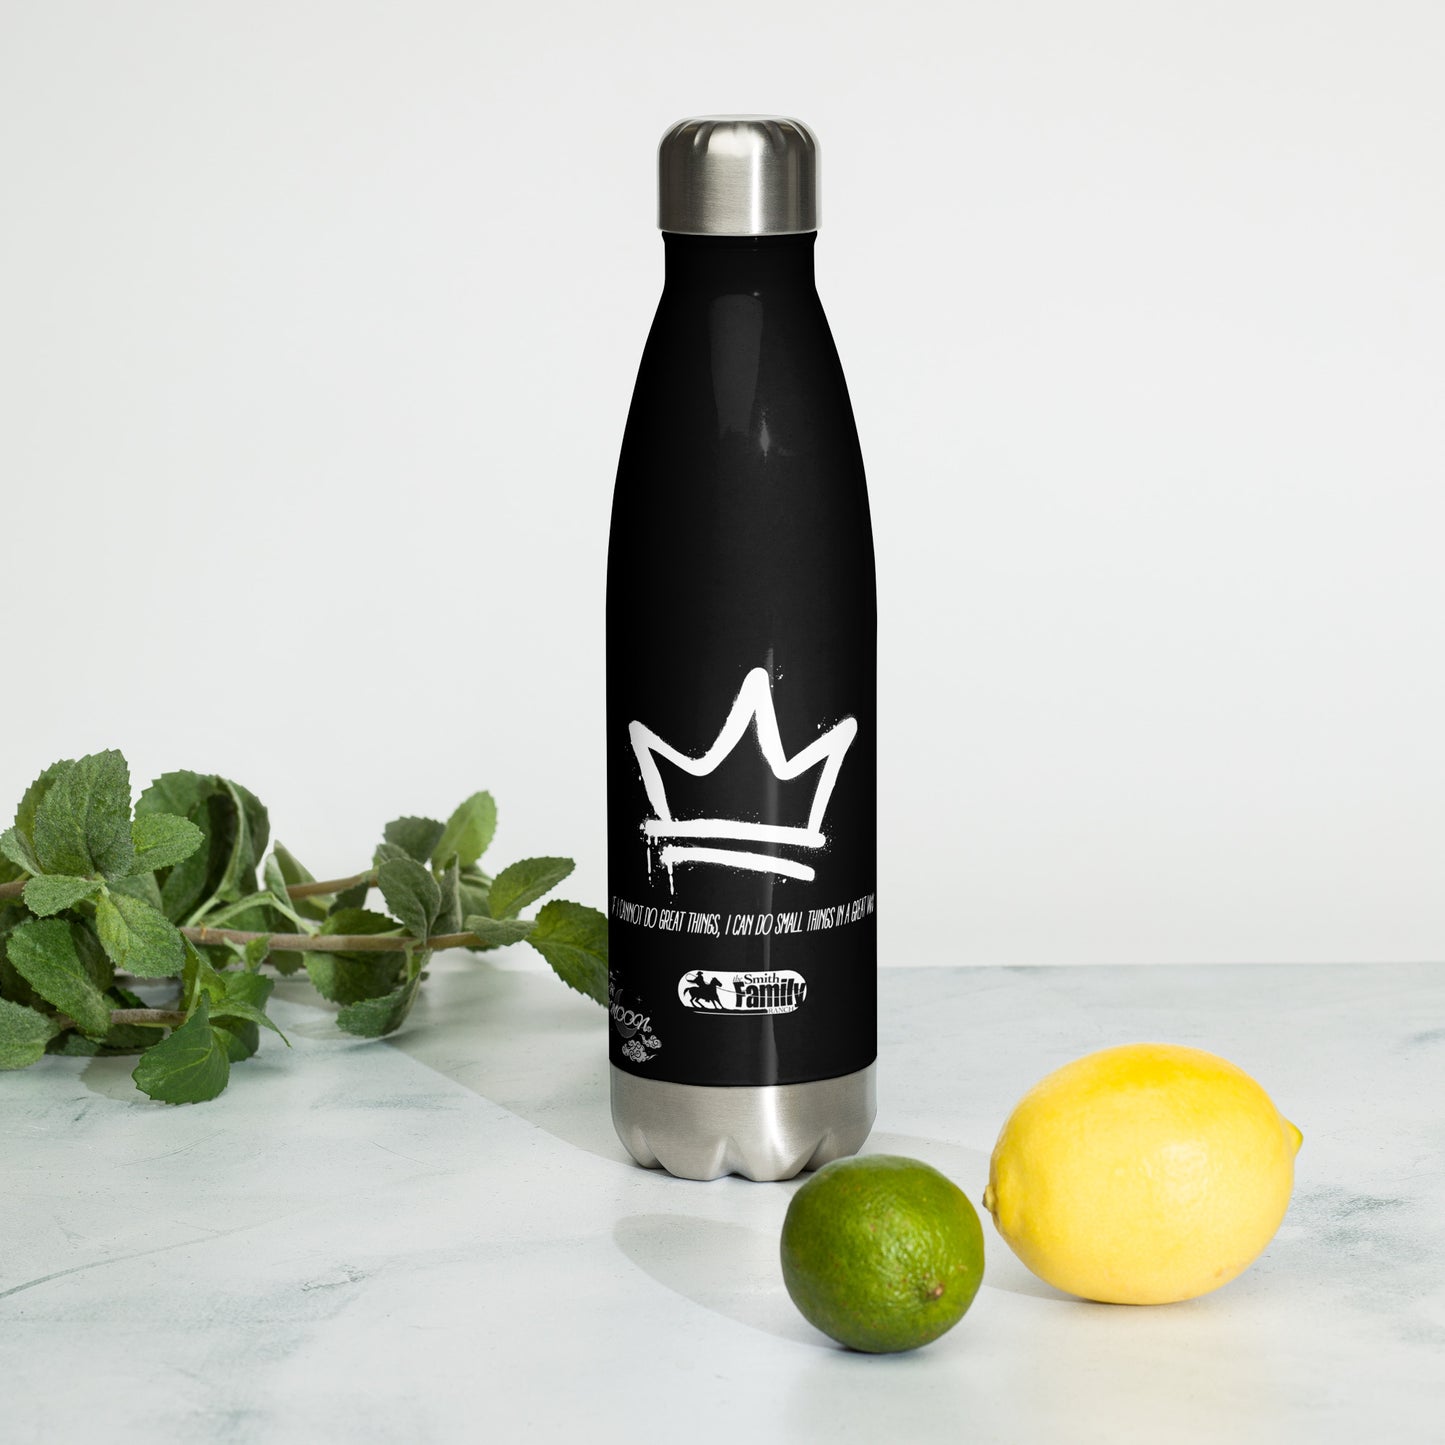 Stainless steel water bottle (Black & White Crown)